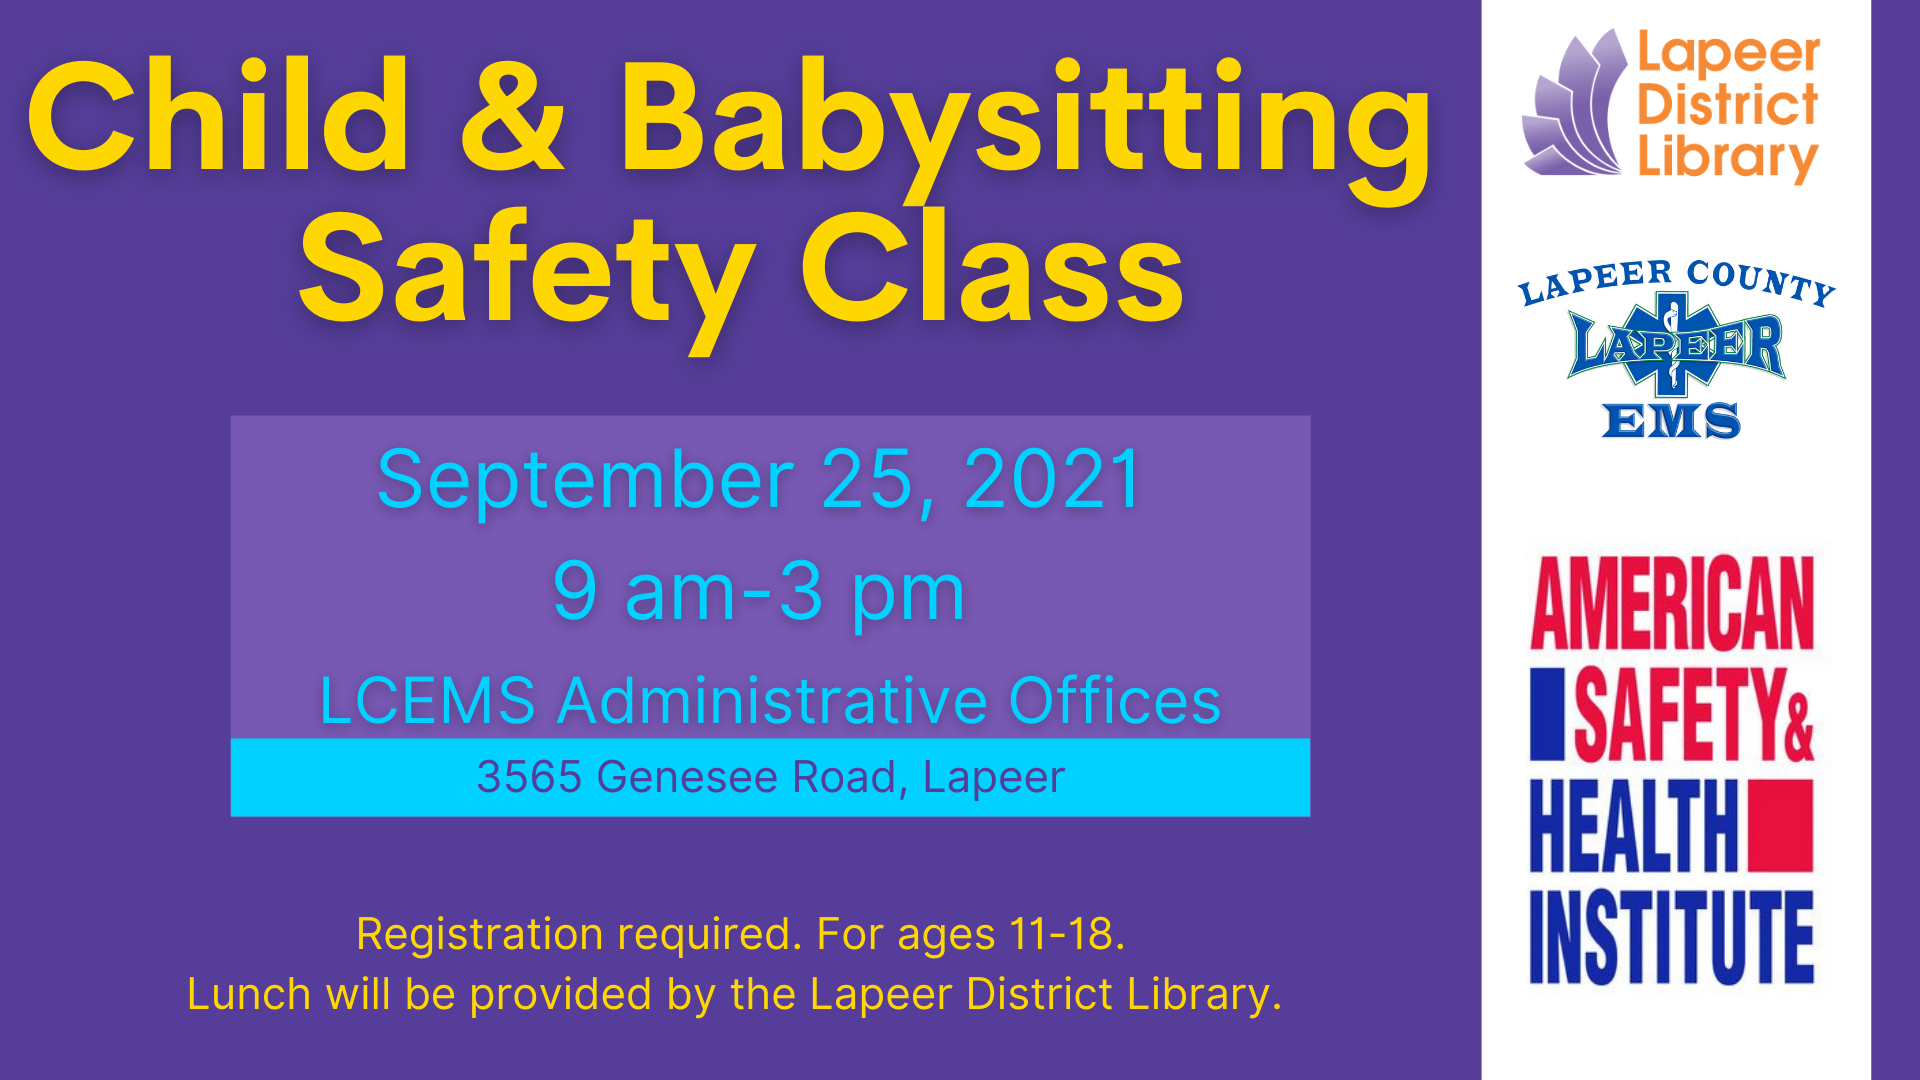 Child & Babysitting Safety Class